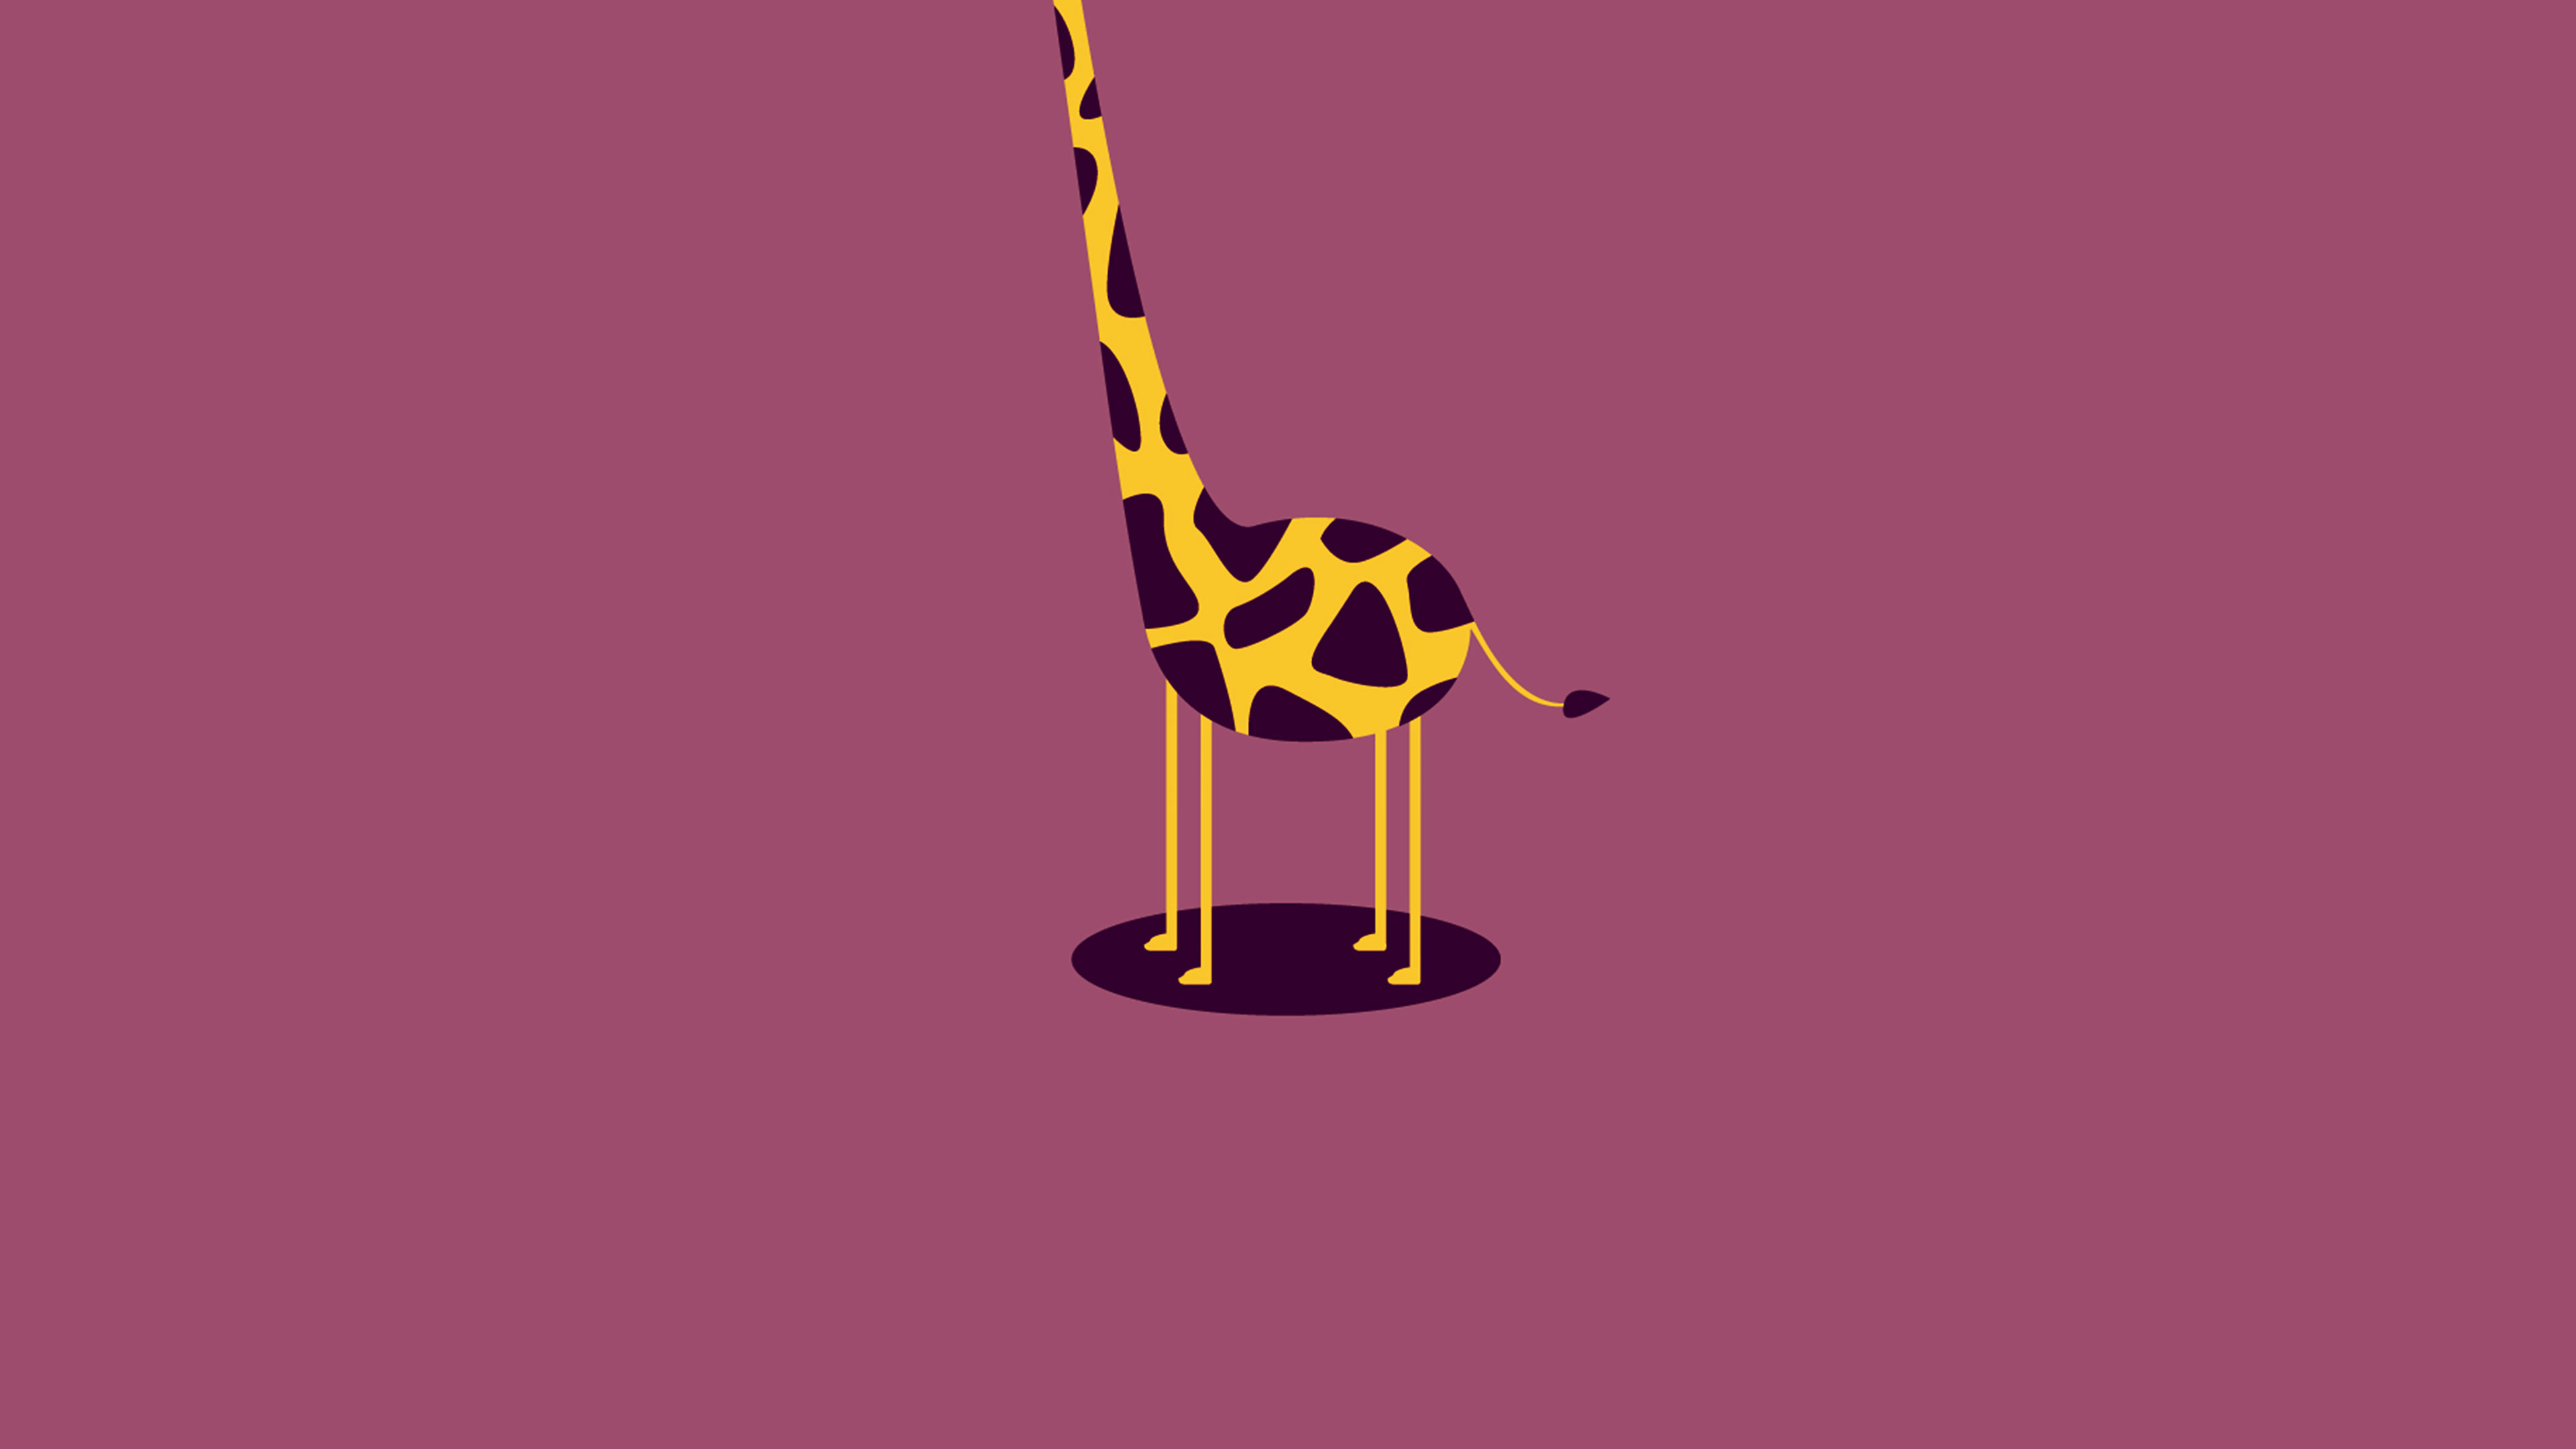 wallpaper for desktop, laptop. giraffe cute minimal simple